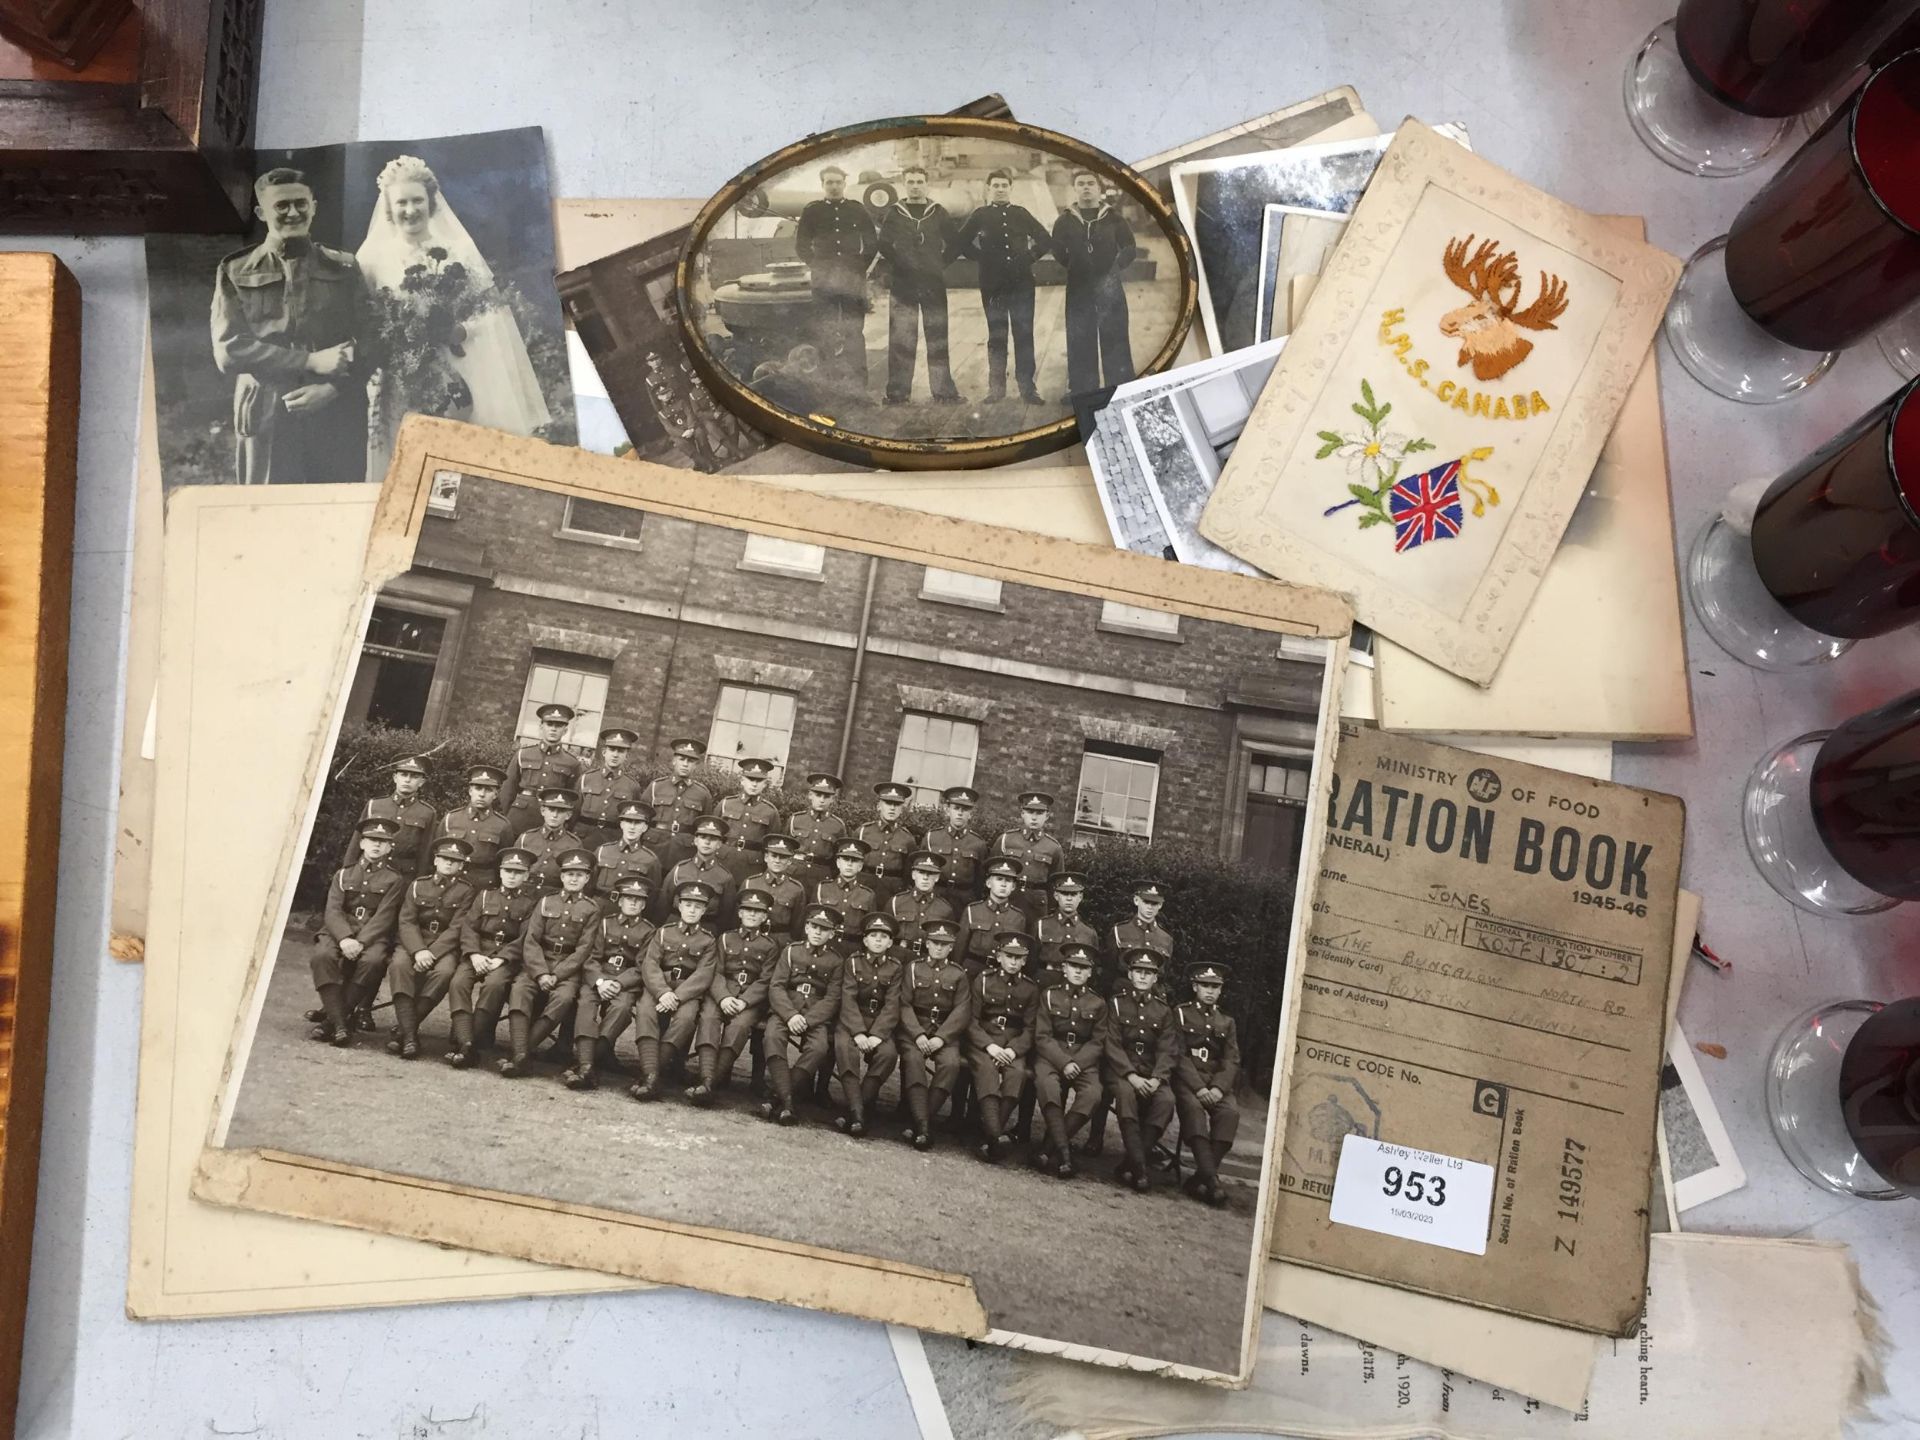 VARIOUS WORLD WAR II PHOTOGRAPHS AND A RATION BOOK